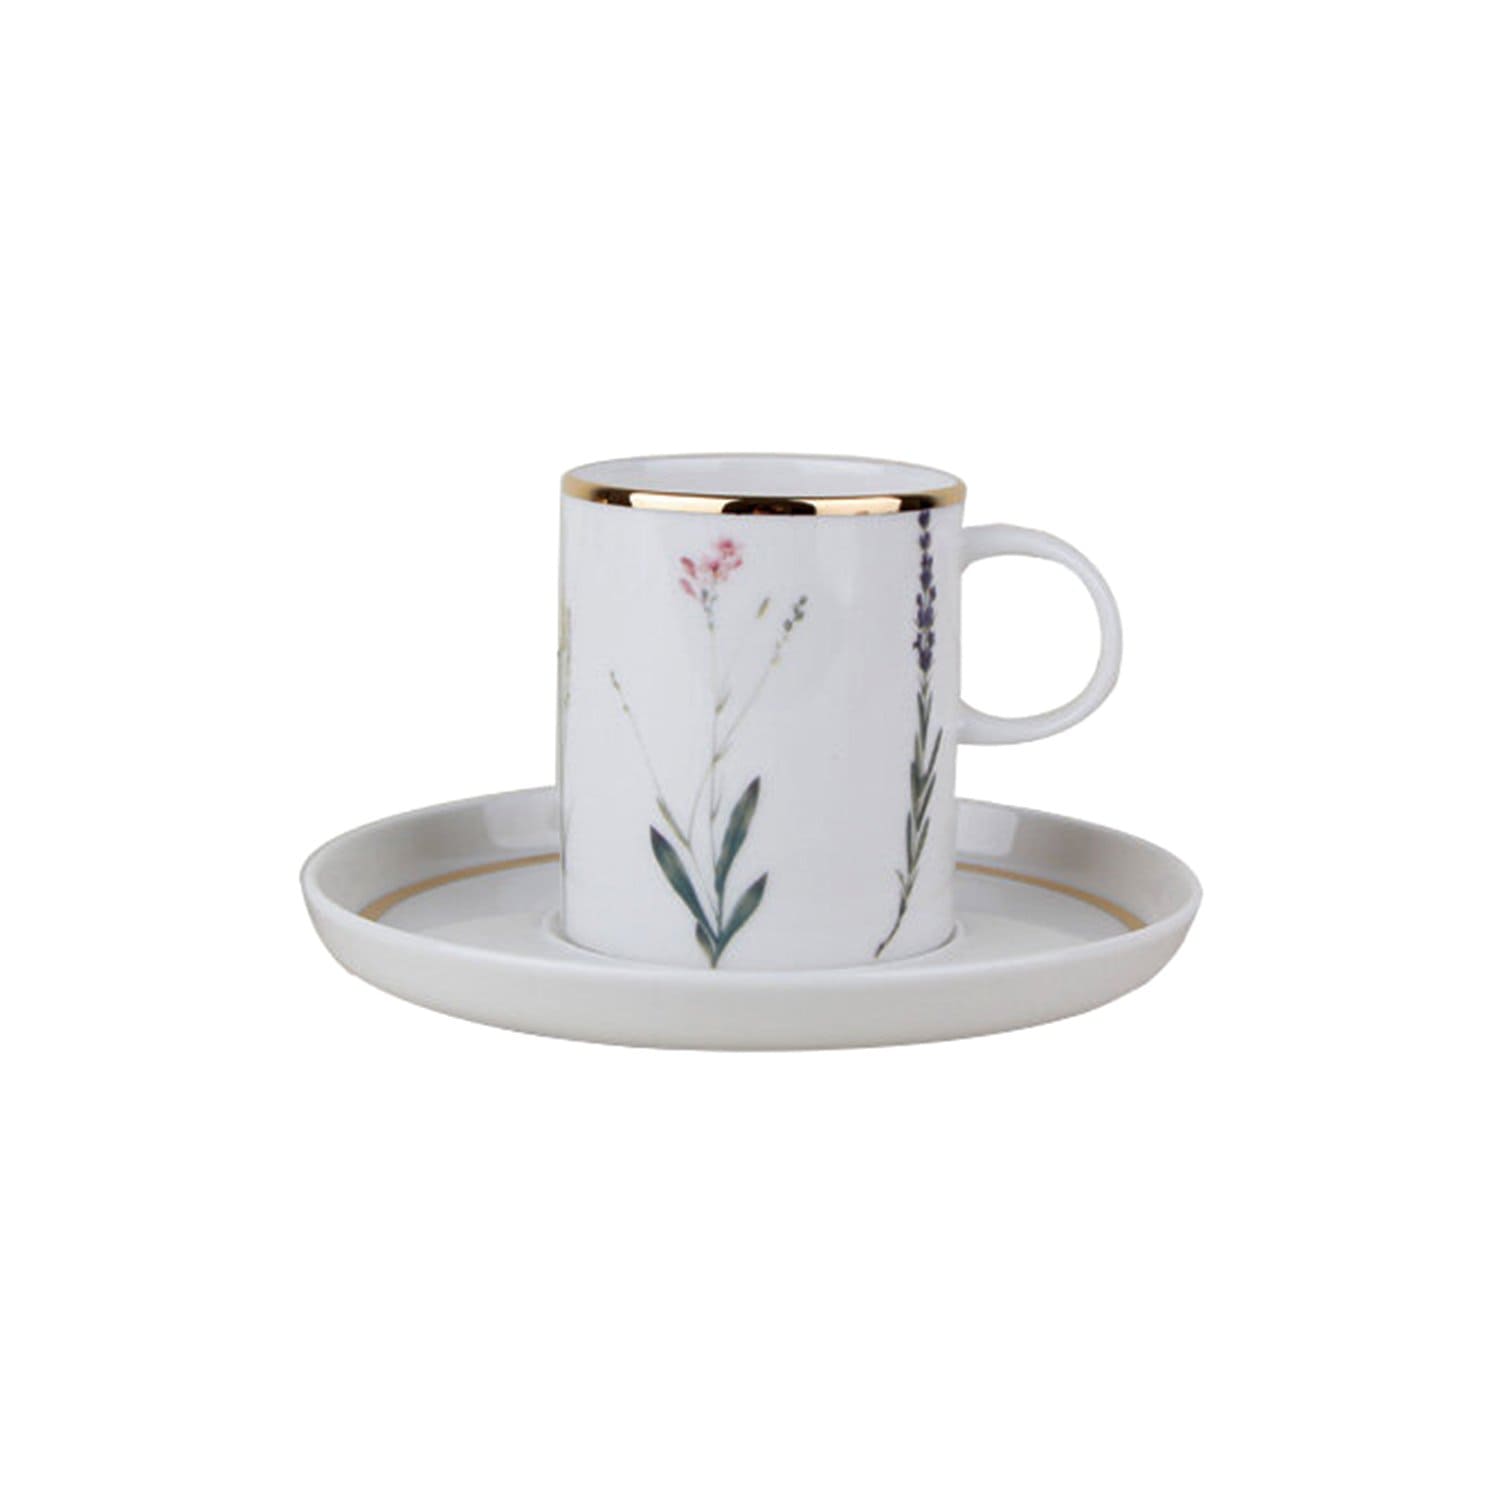 Porland Porselen Botanical Coffee Cup and Saucer Set - 80 cc. - 04ALM005075 - Jashanmal Home